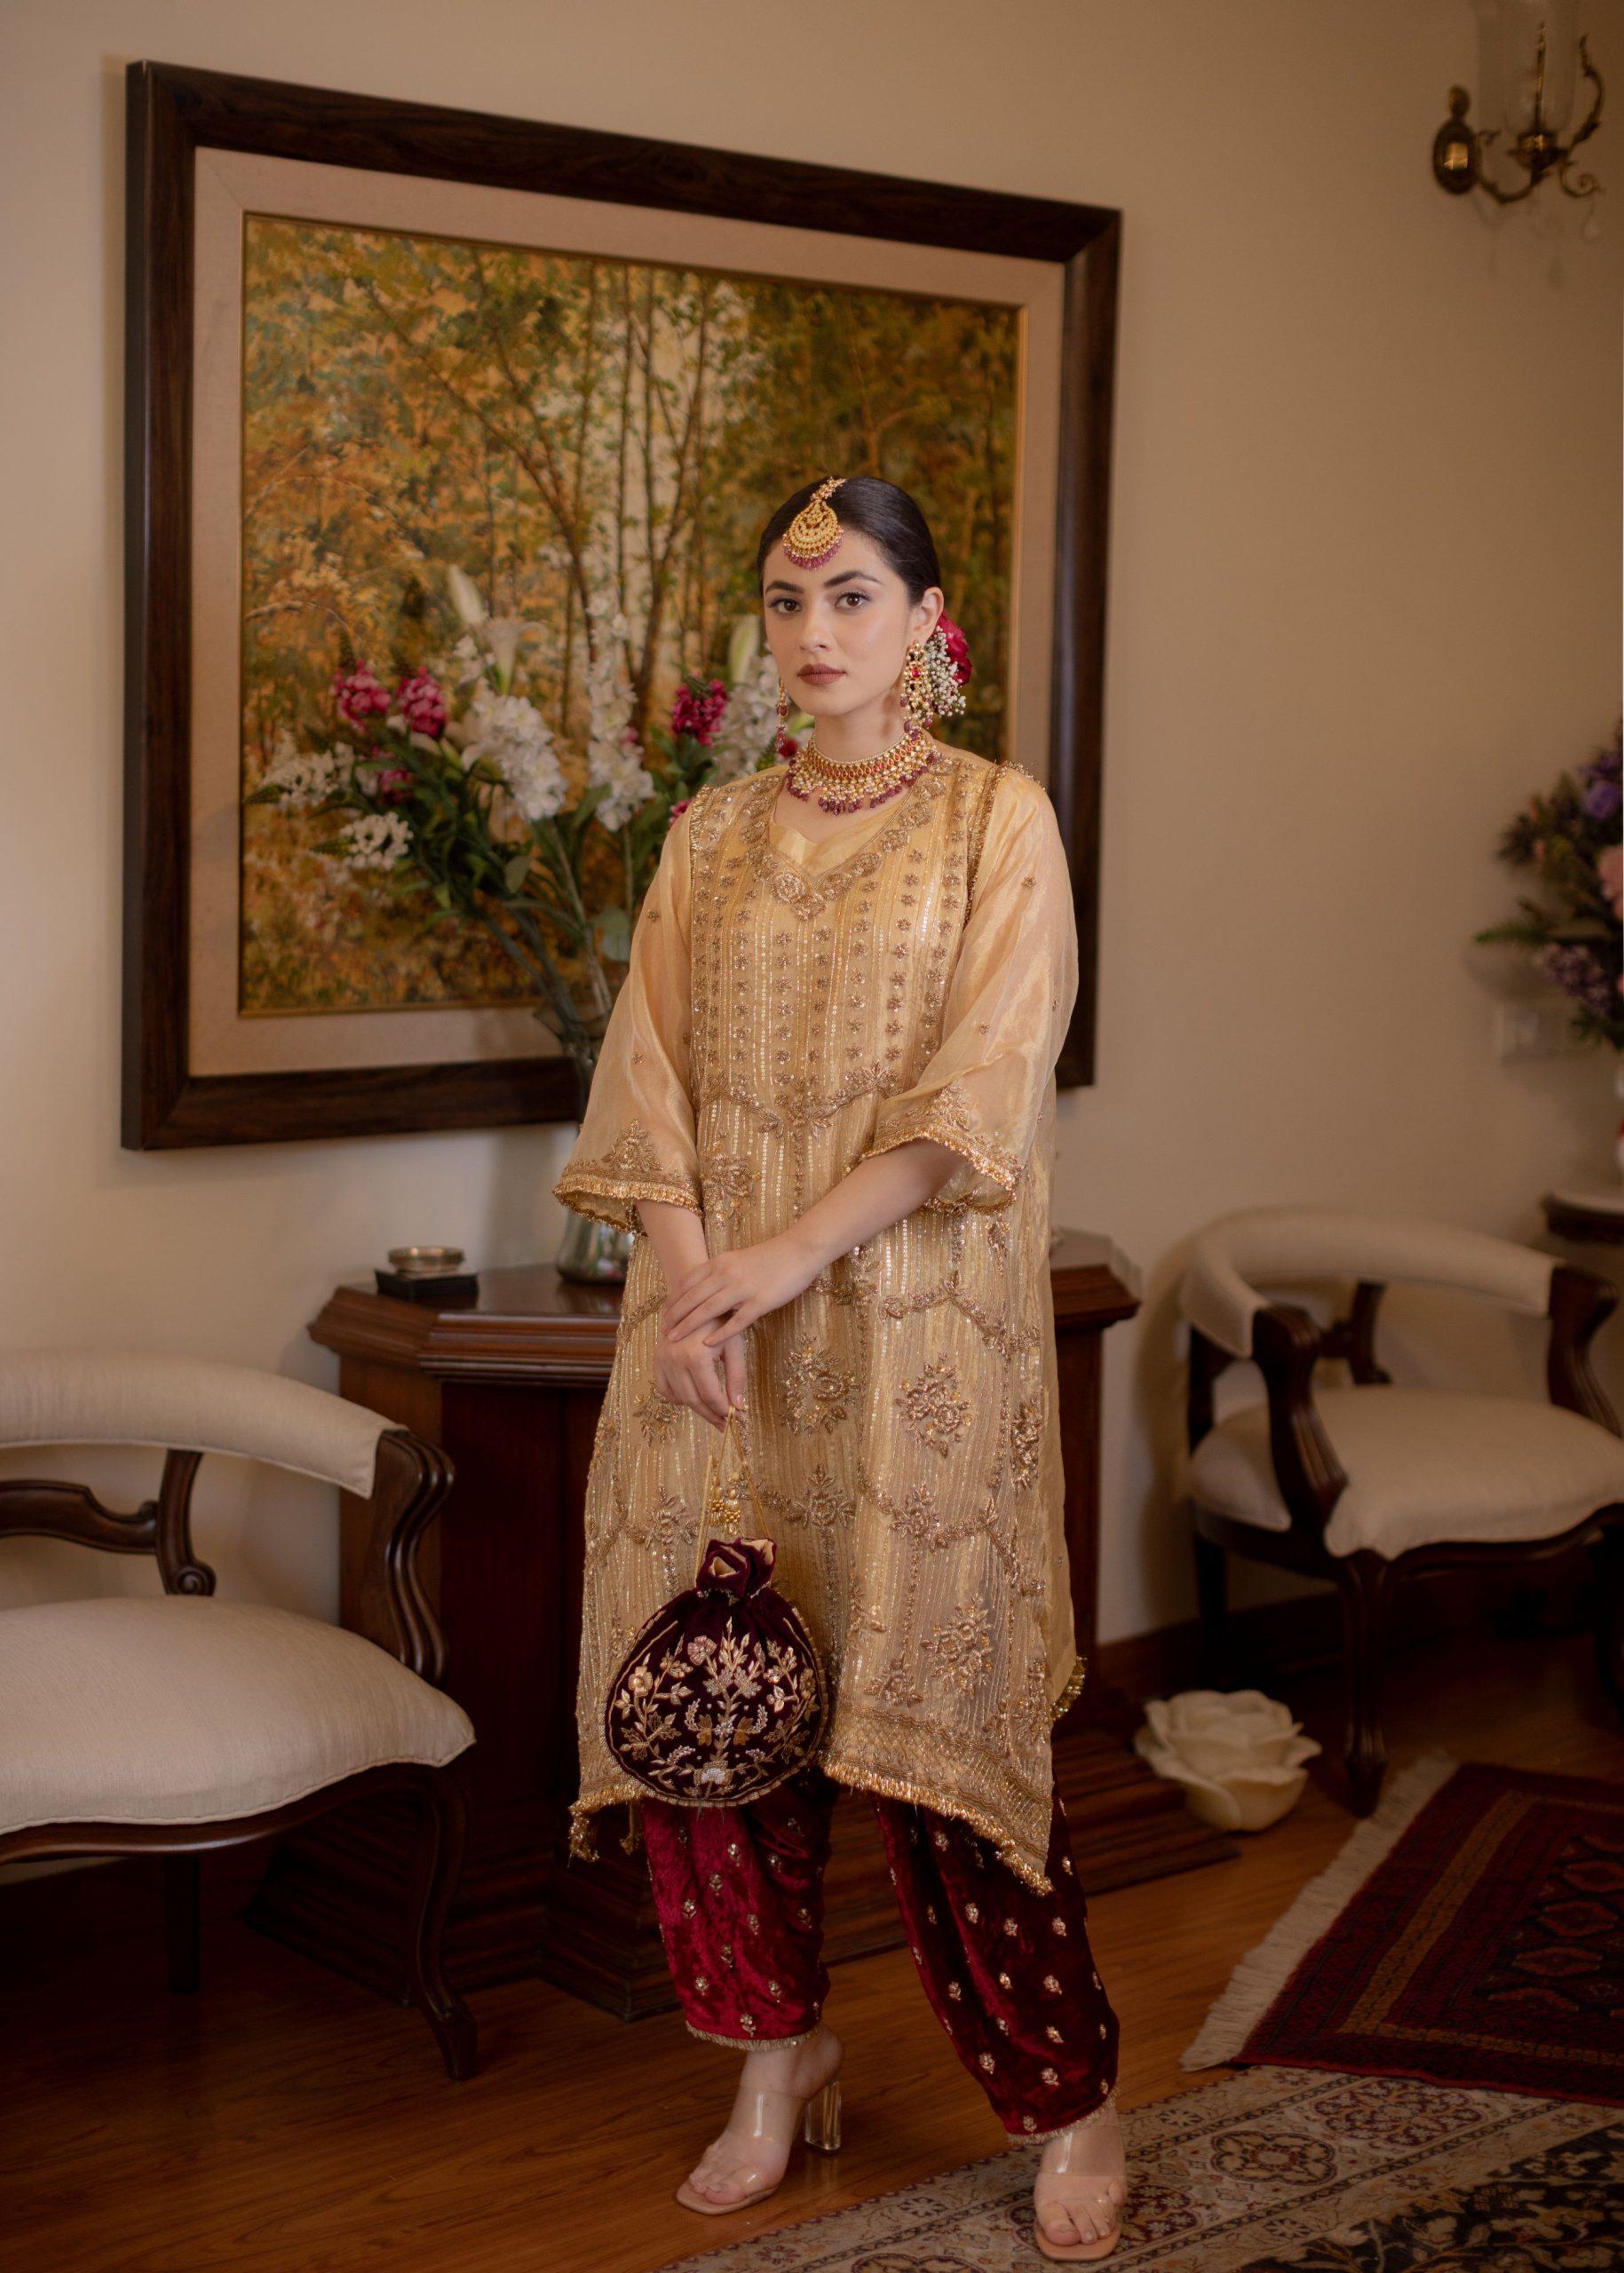 Pinterest | Punjabi girls, Clothes design, India beauty women